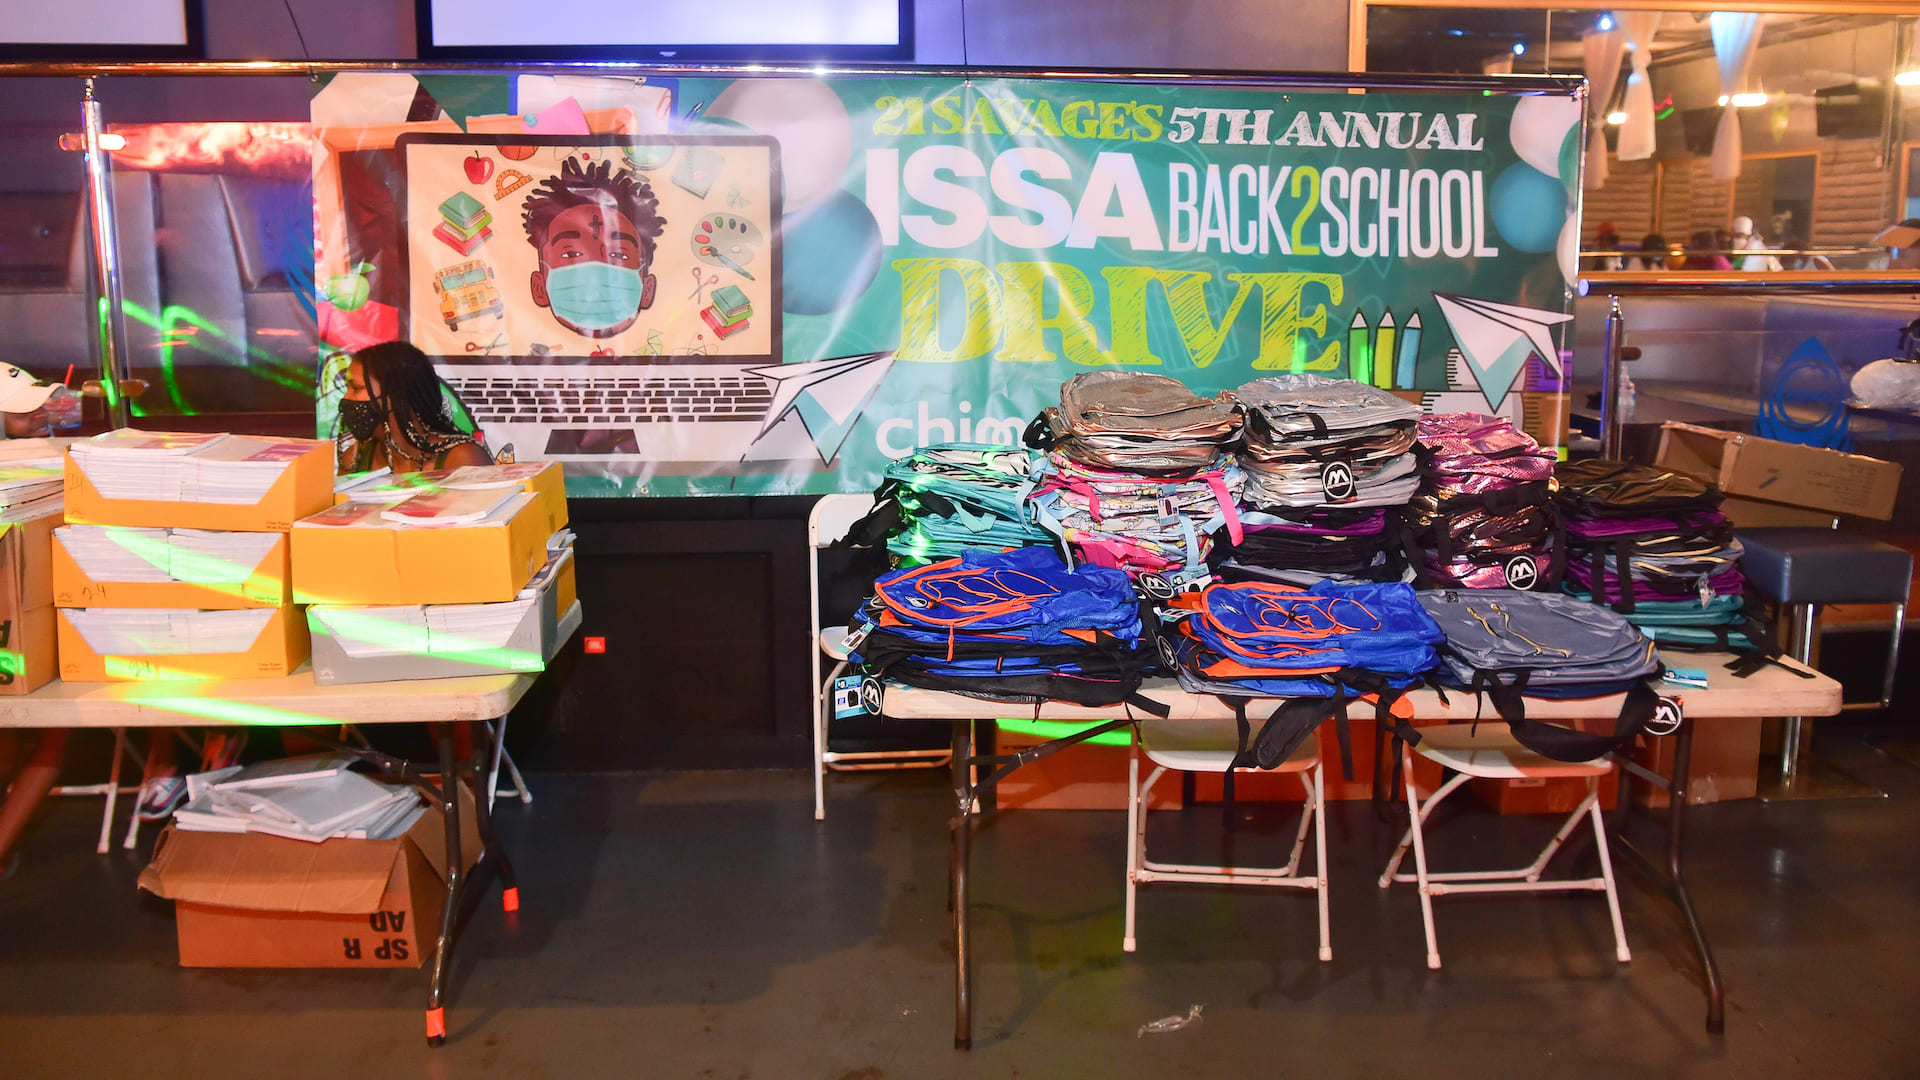 21 Savage Explains Importance Behind Third Annual “Issa School Drive”